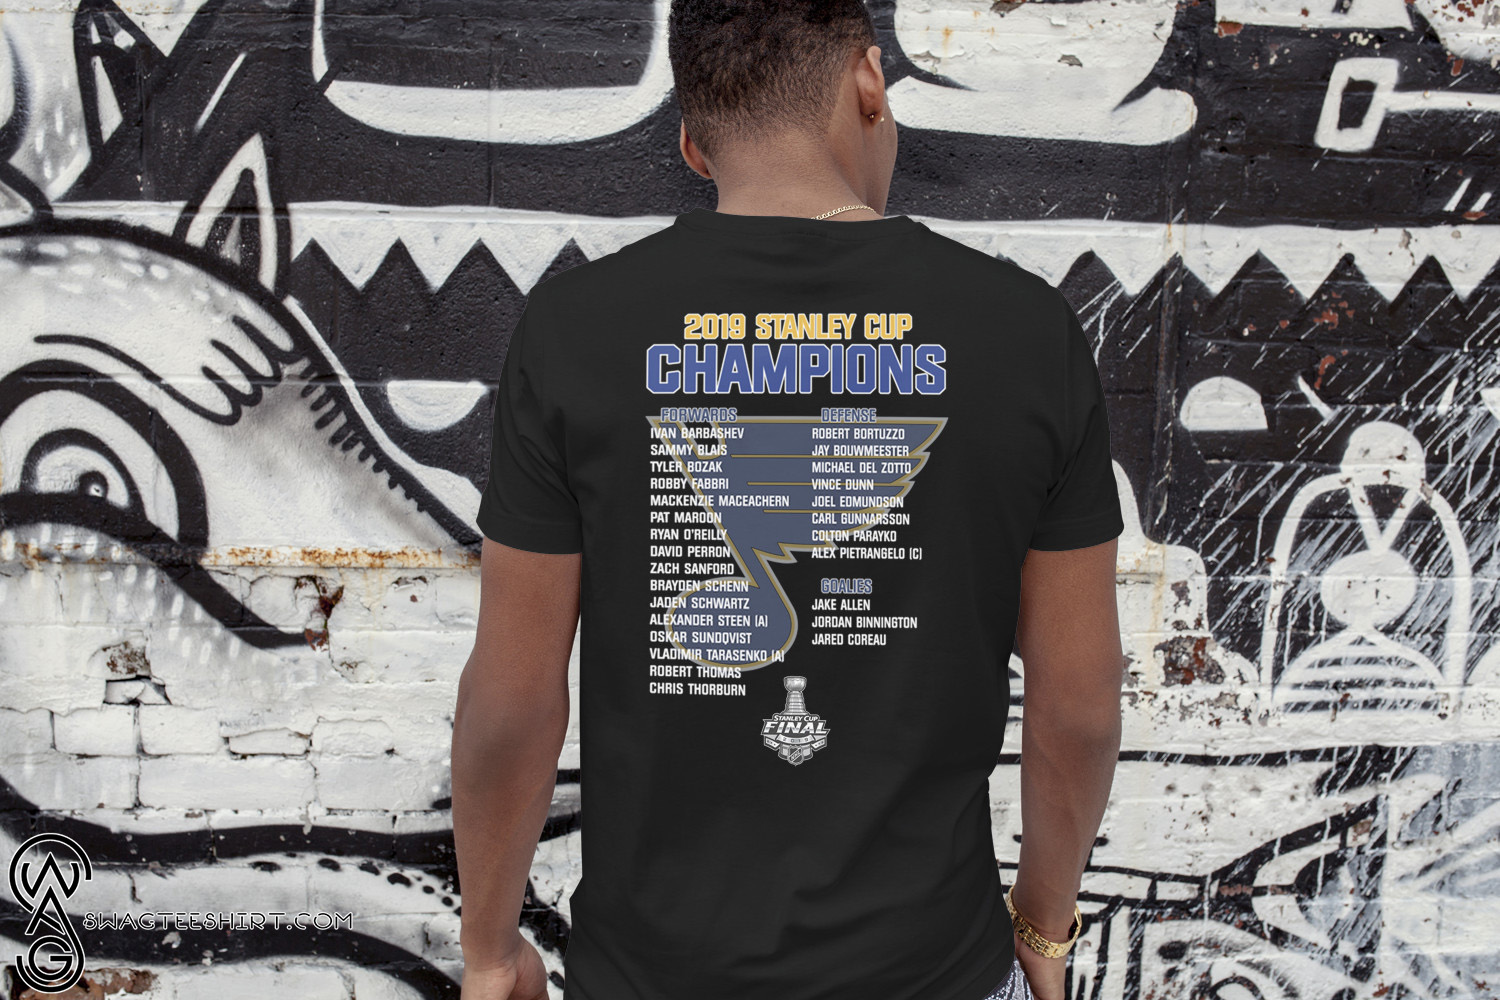 https://swagteeshirt.com/wp-content/uploads/2019/06/St-louis-blues-2019-stanley-cup-champions-team-names-guy-shirt.jpg